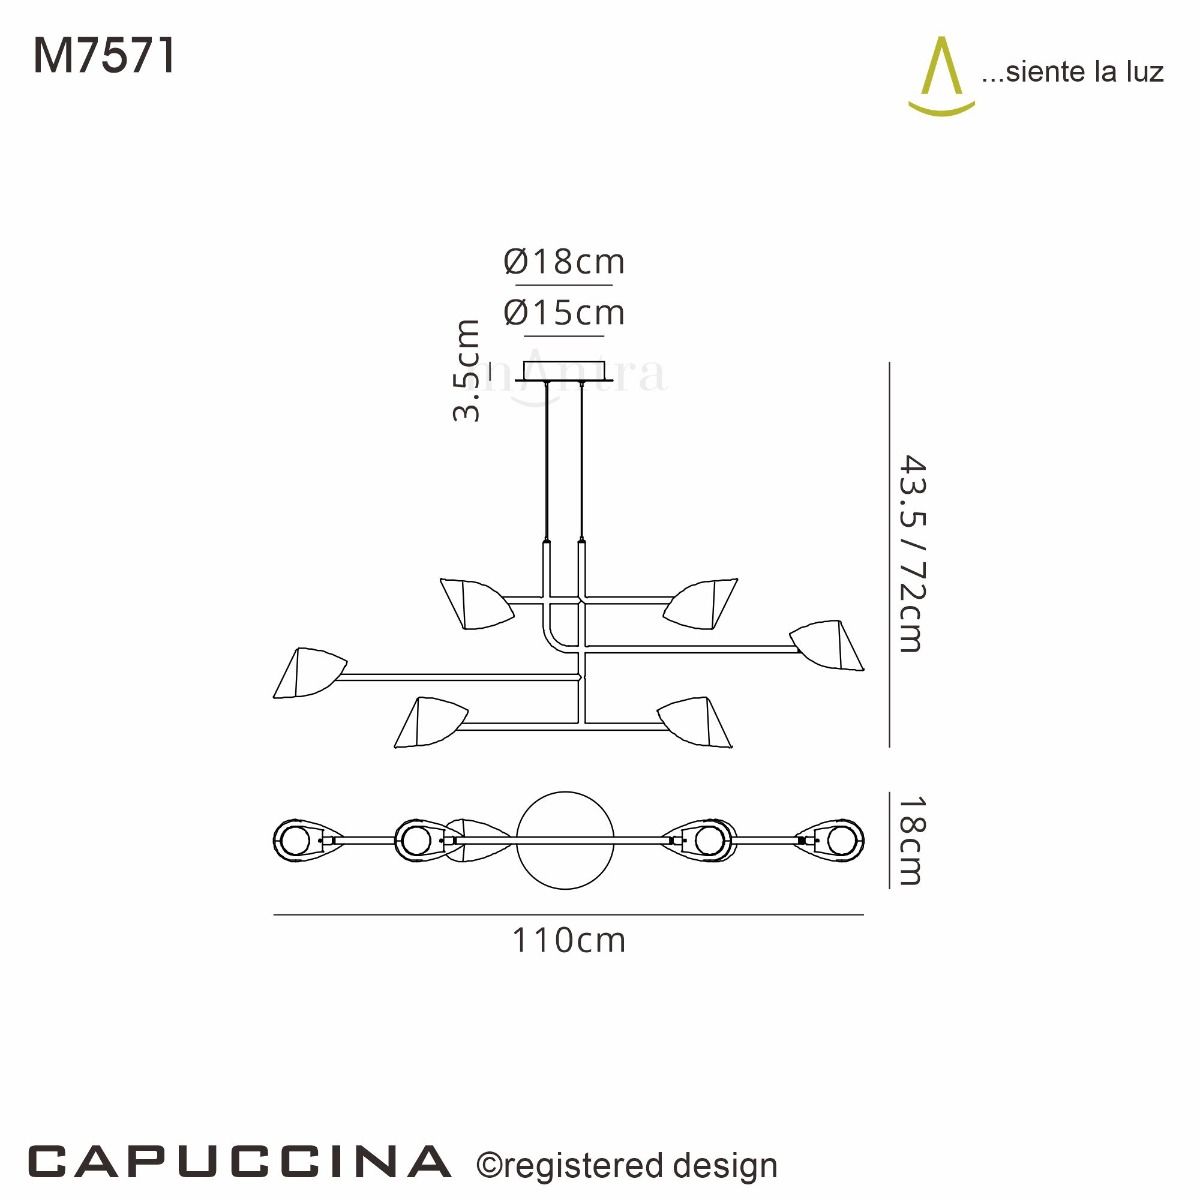 MAN/M7571 Mantra Capuccina 6 Light Linear Pendant White